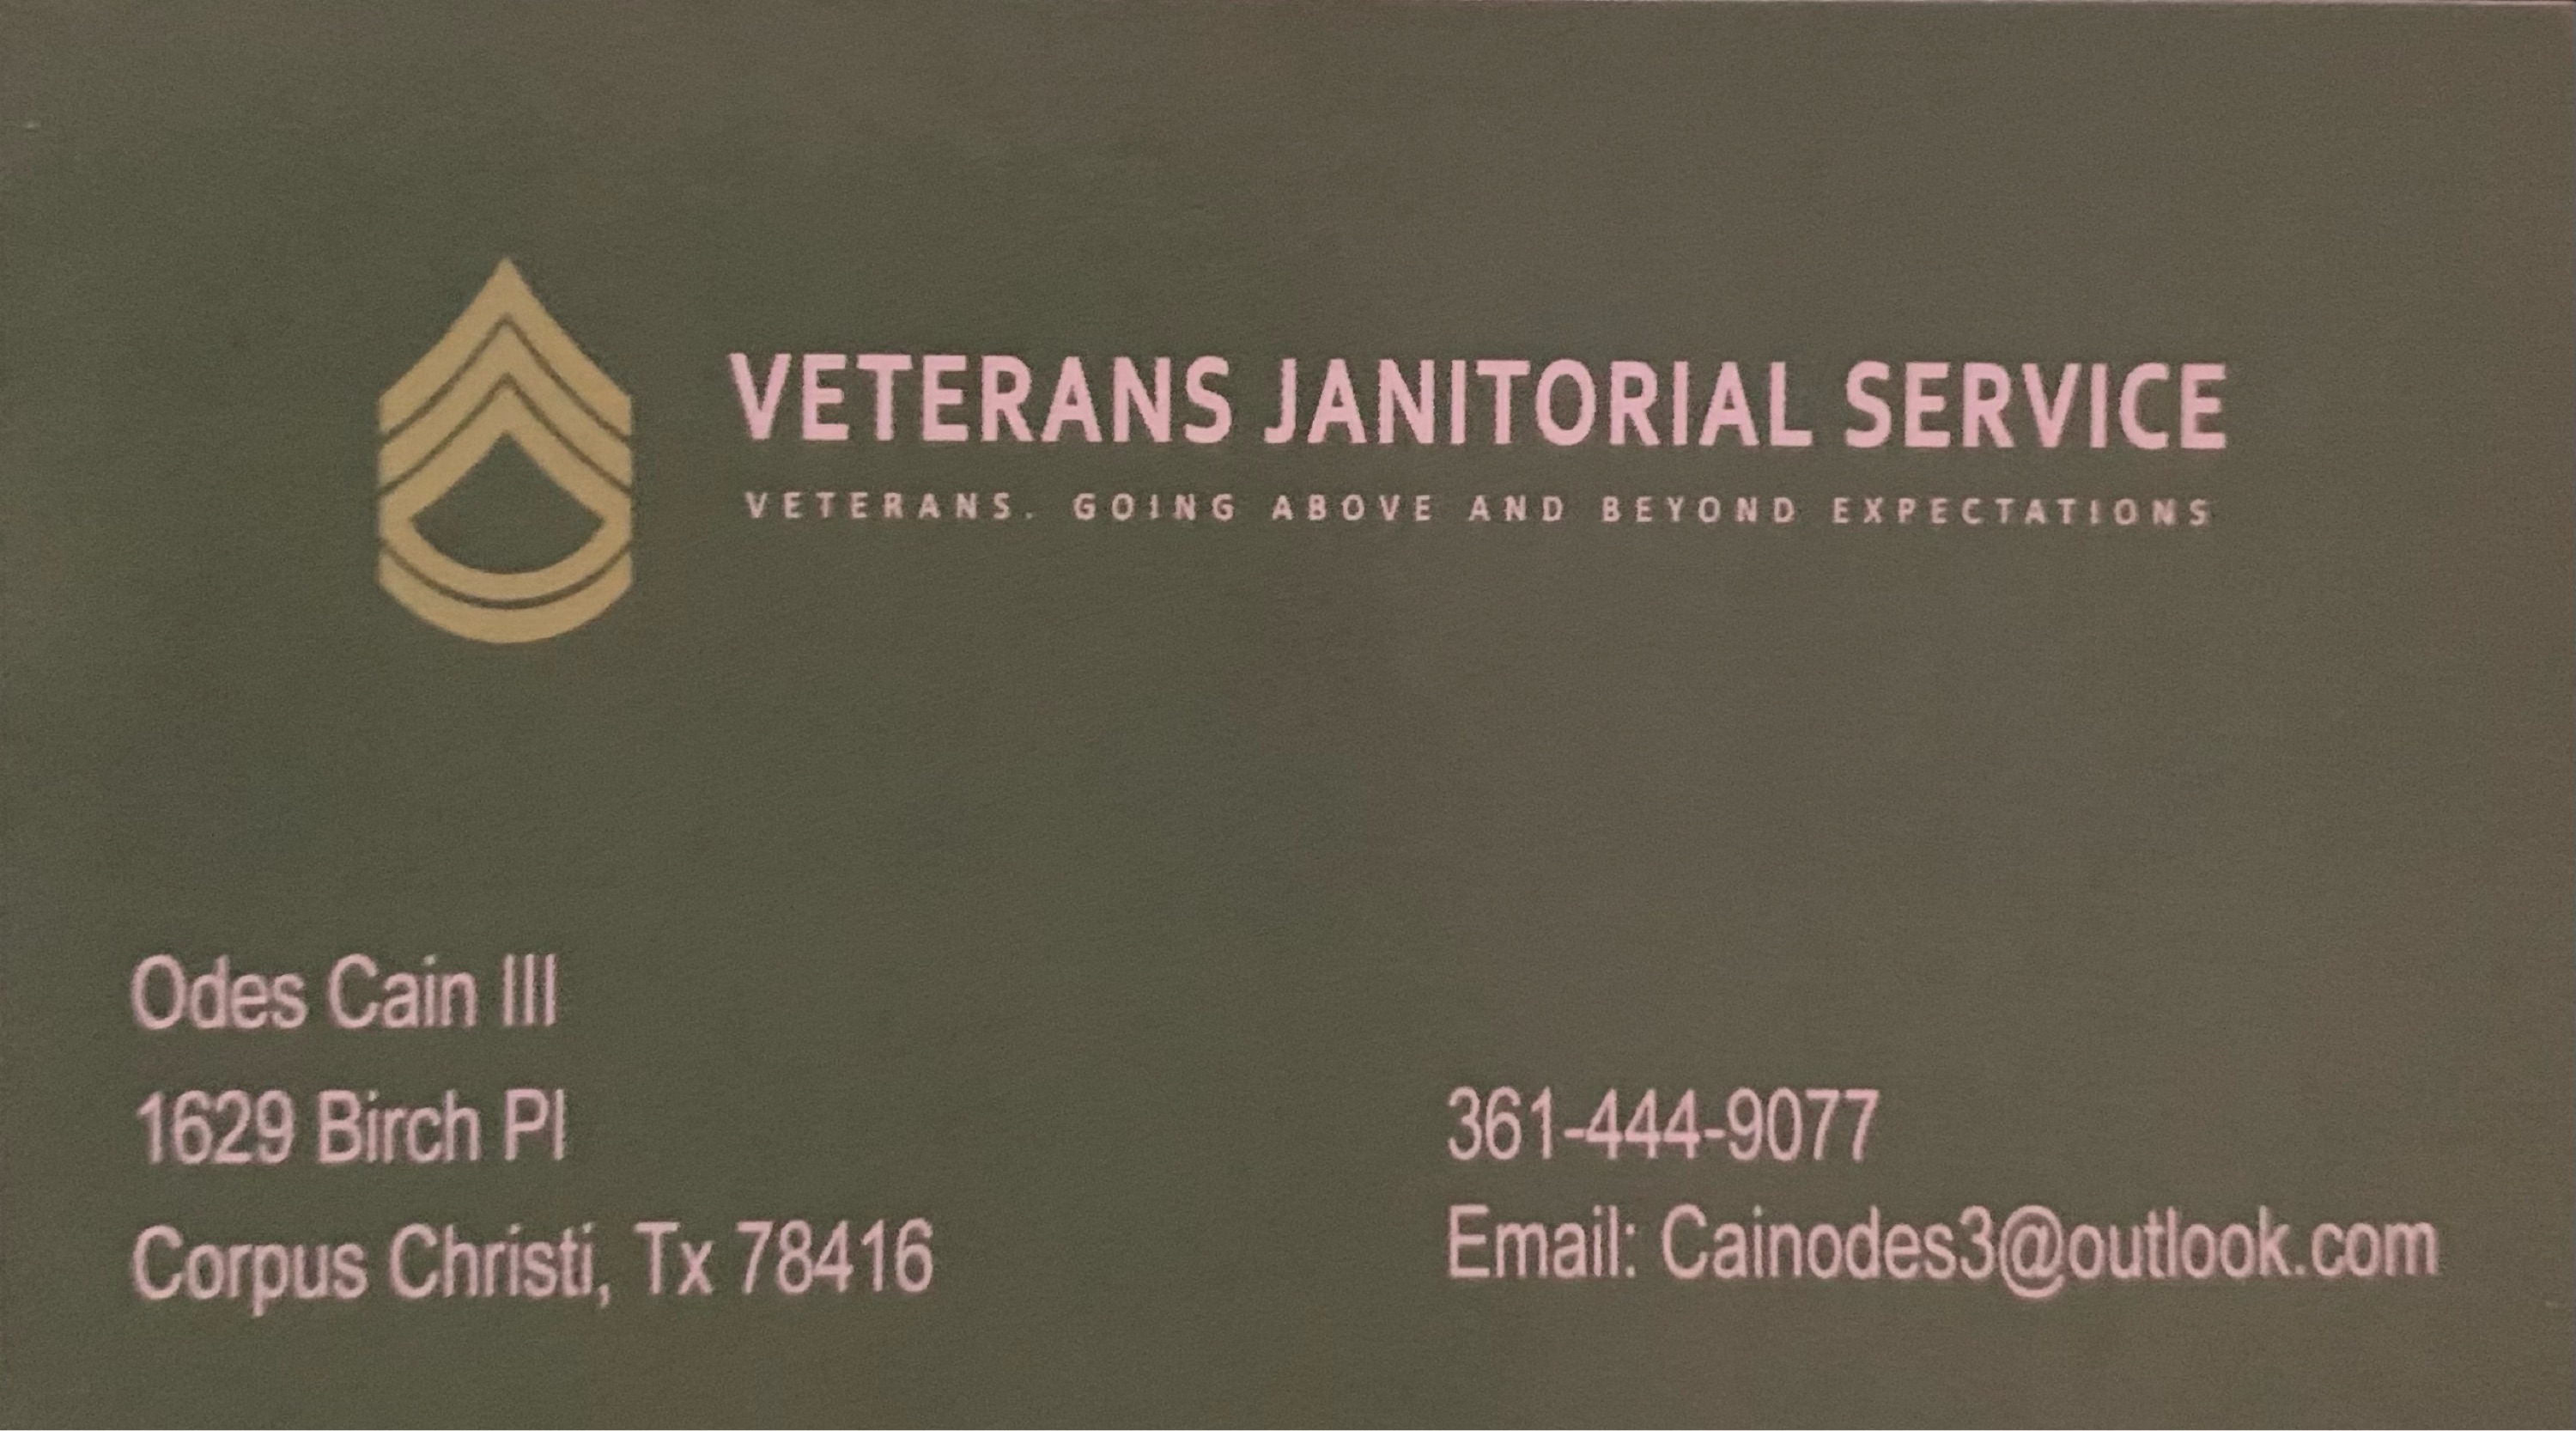 Veterans Janitorial Service Logo